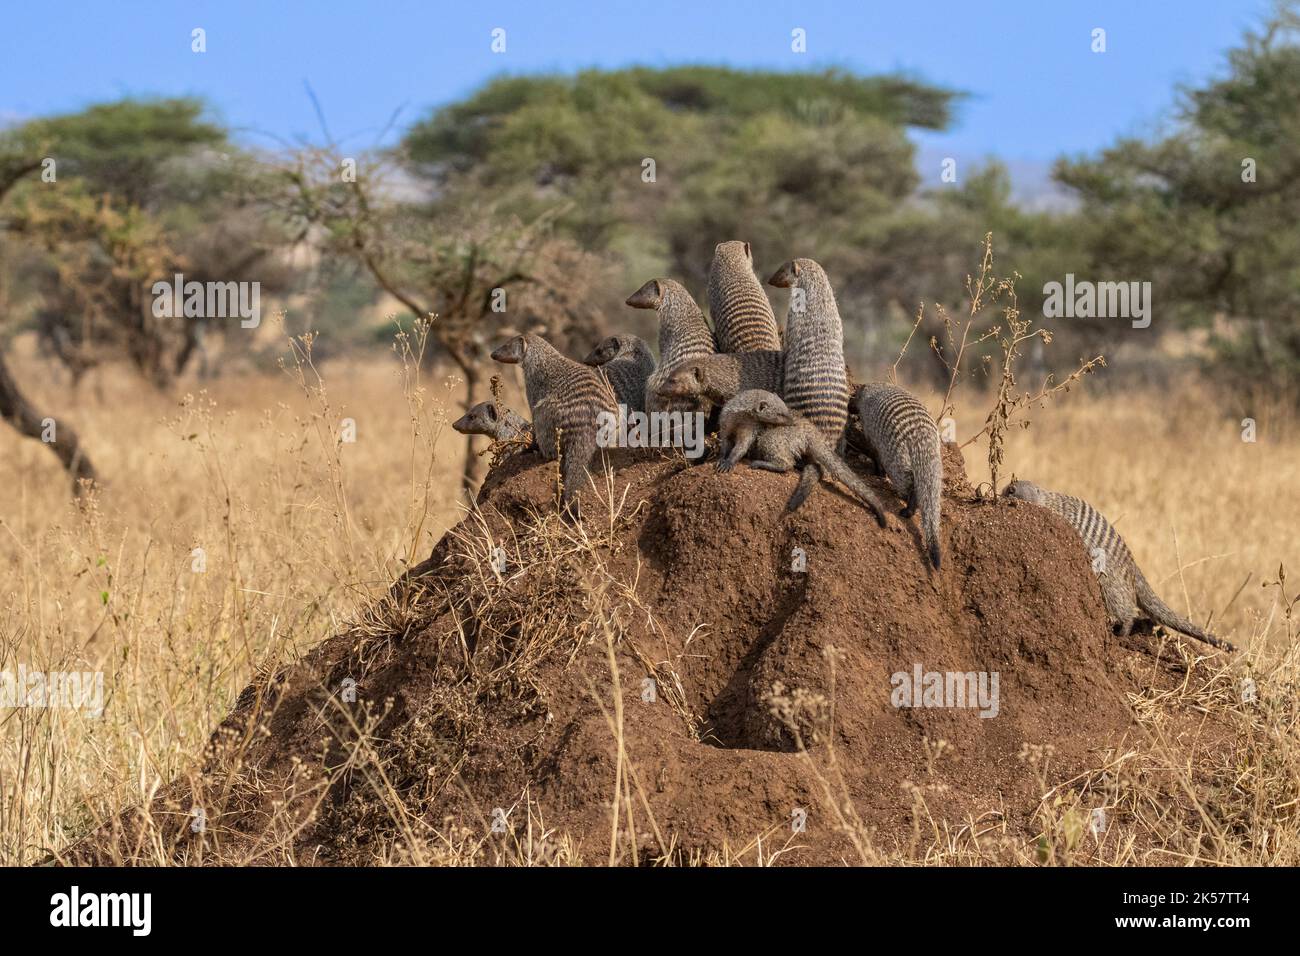 Banded mongoose (Mungos mungo) guarding group on Mound-building termites in Serengti National Park, Tanzania. Stock Photo